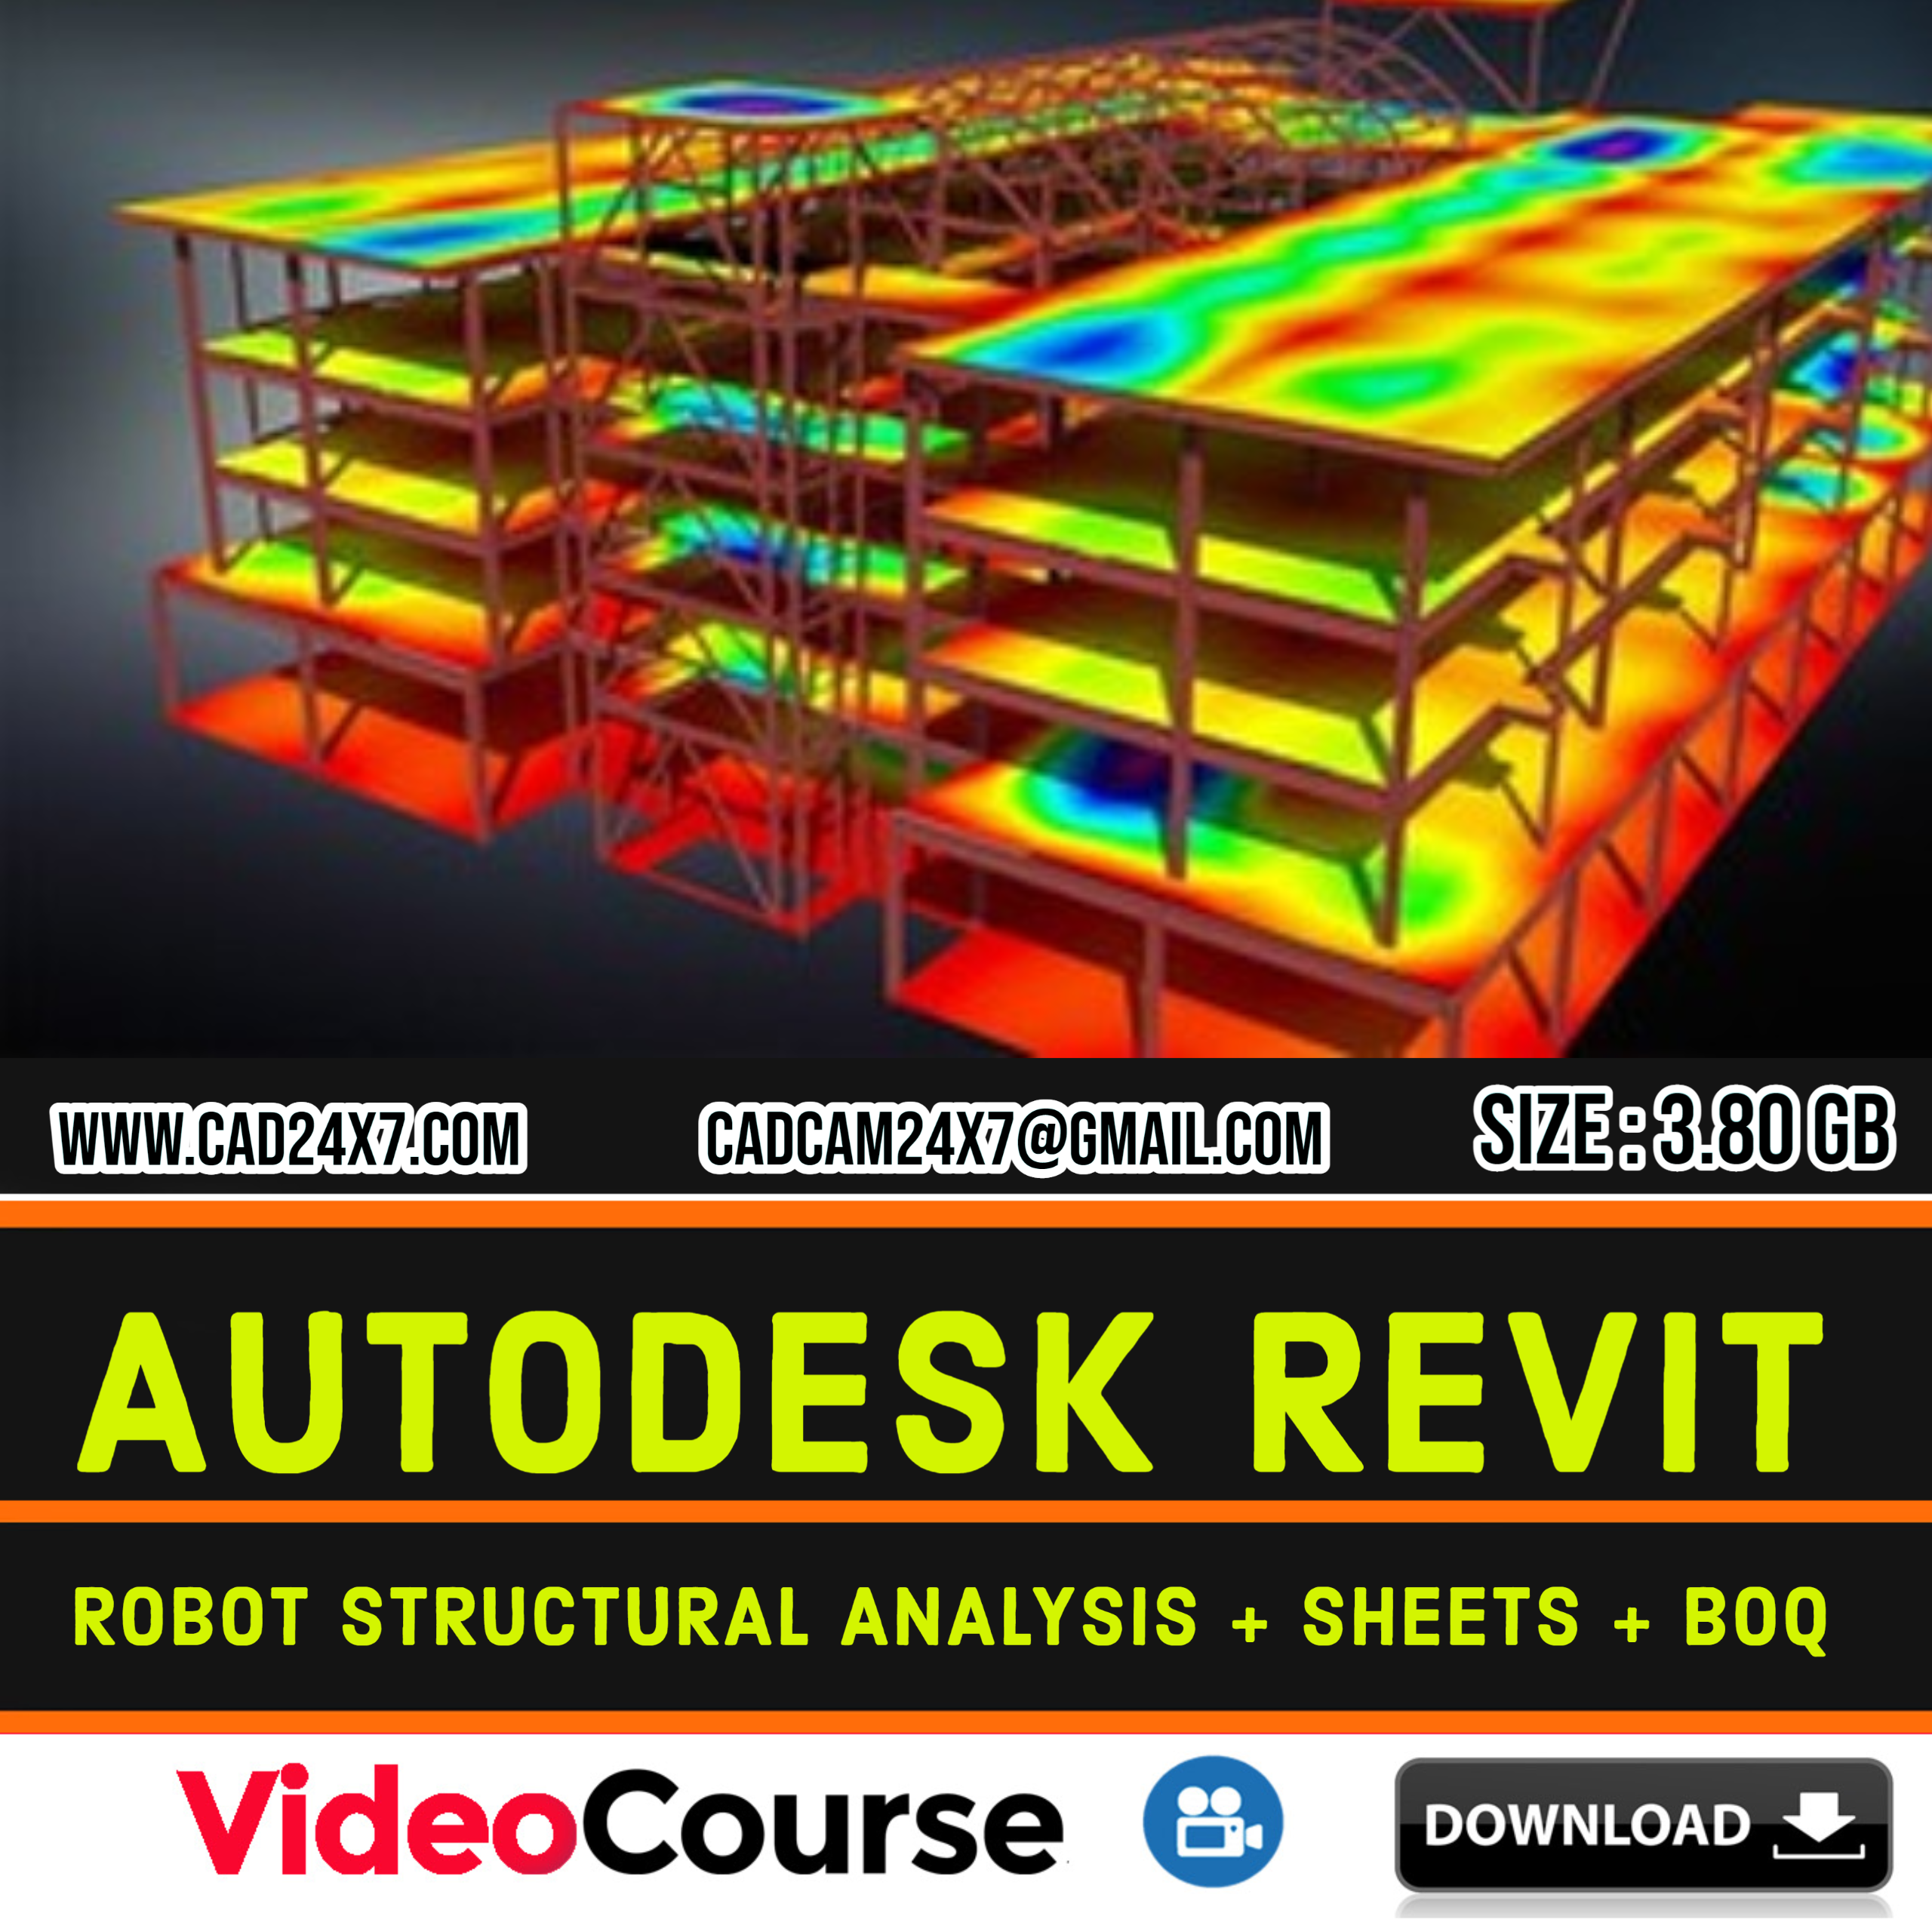 Autodesk-Revit-&-Robot-Structural-Analysis-Sheets-BOQ